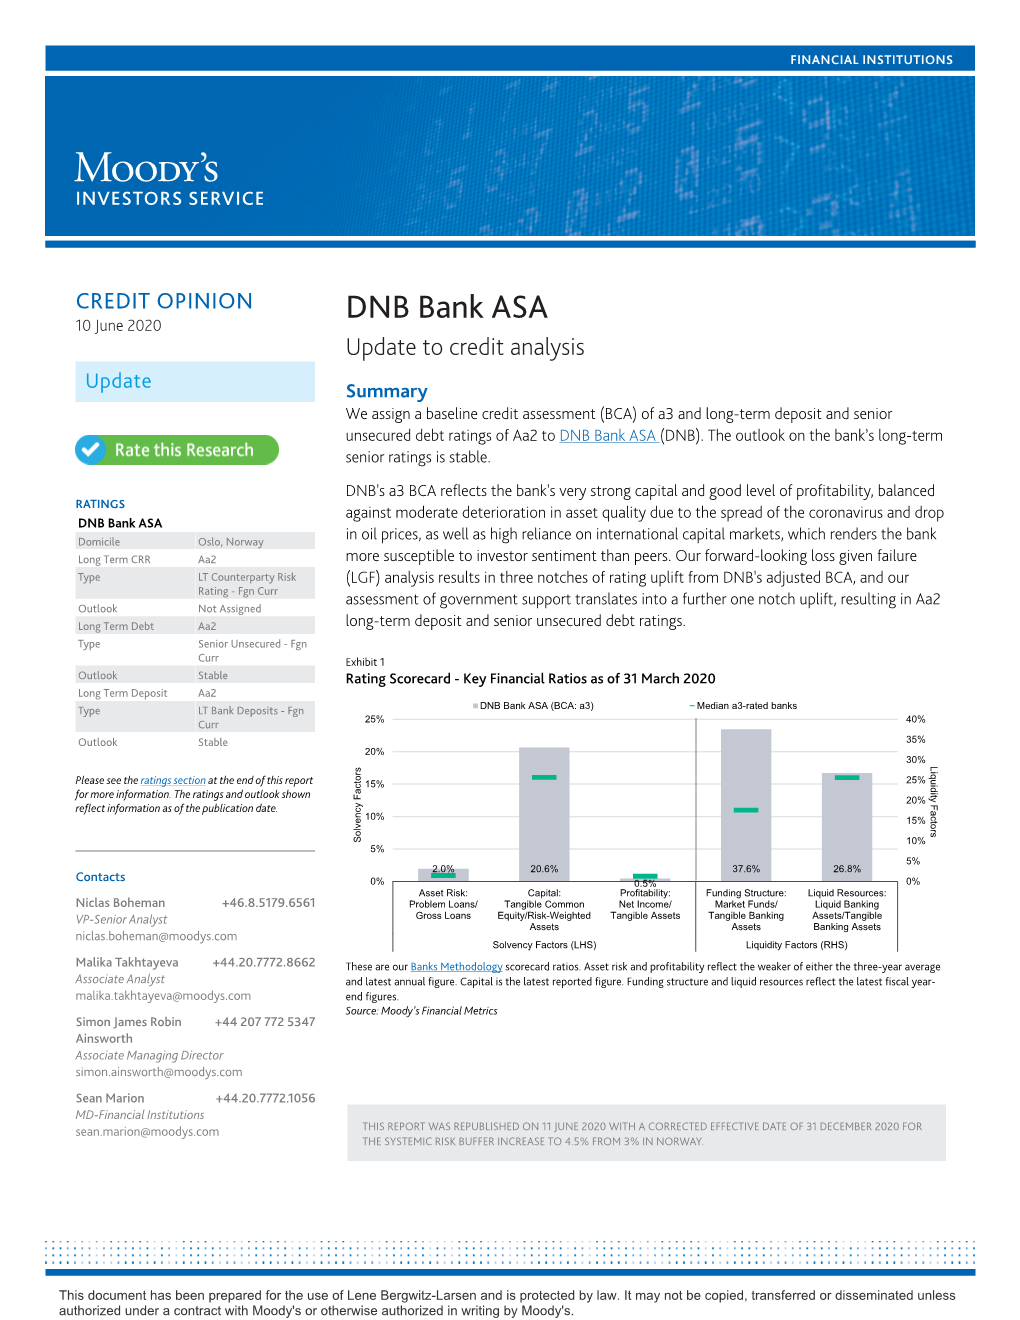 DNB Bank ASA 10 June 2020 Update to Credit Analysis